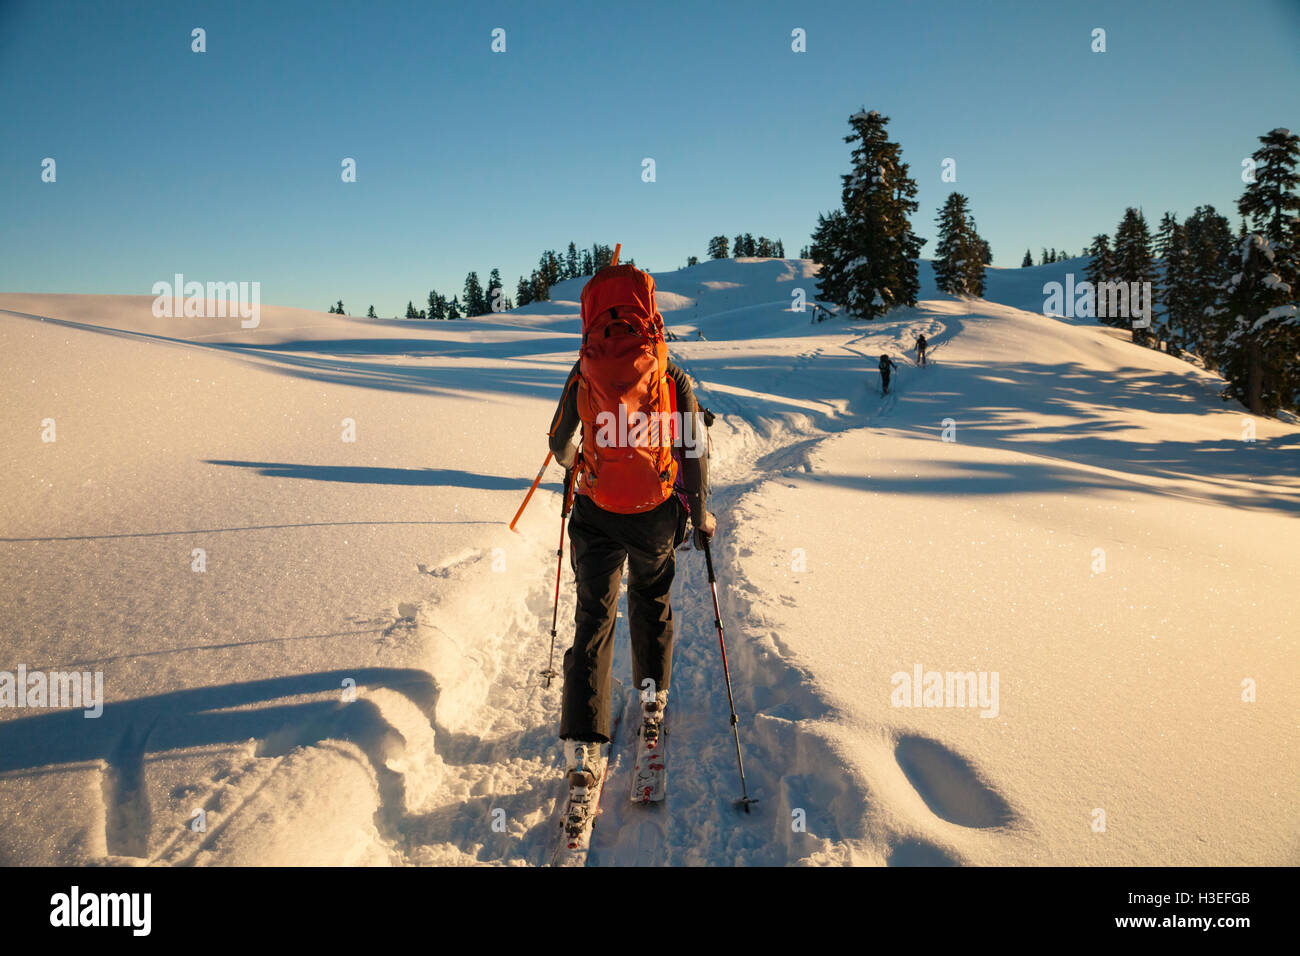 Ski de randonnée dans le parc provincial Garibaldi, British Columbia, Canada. Banque D'Images